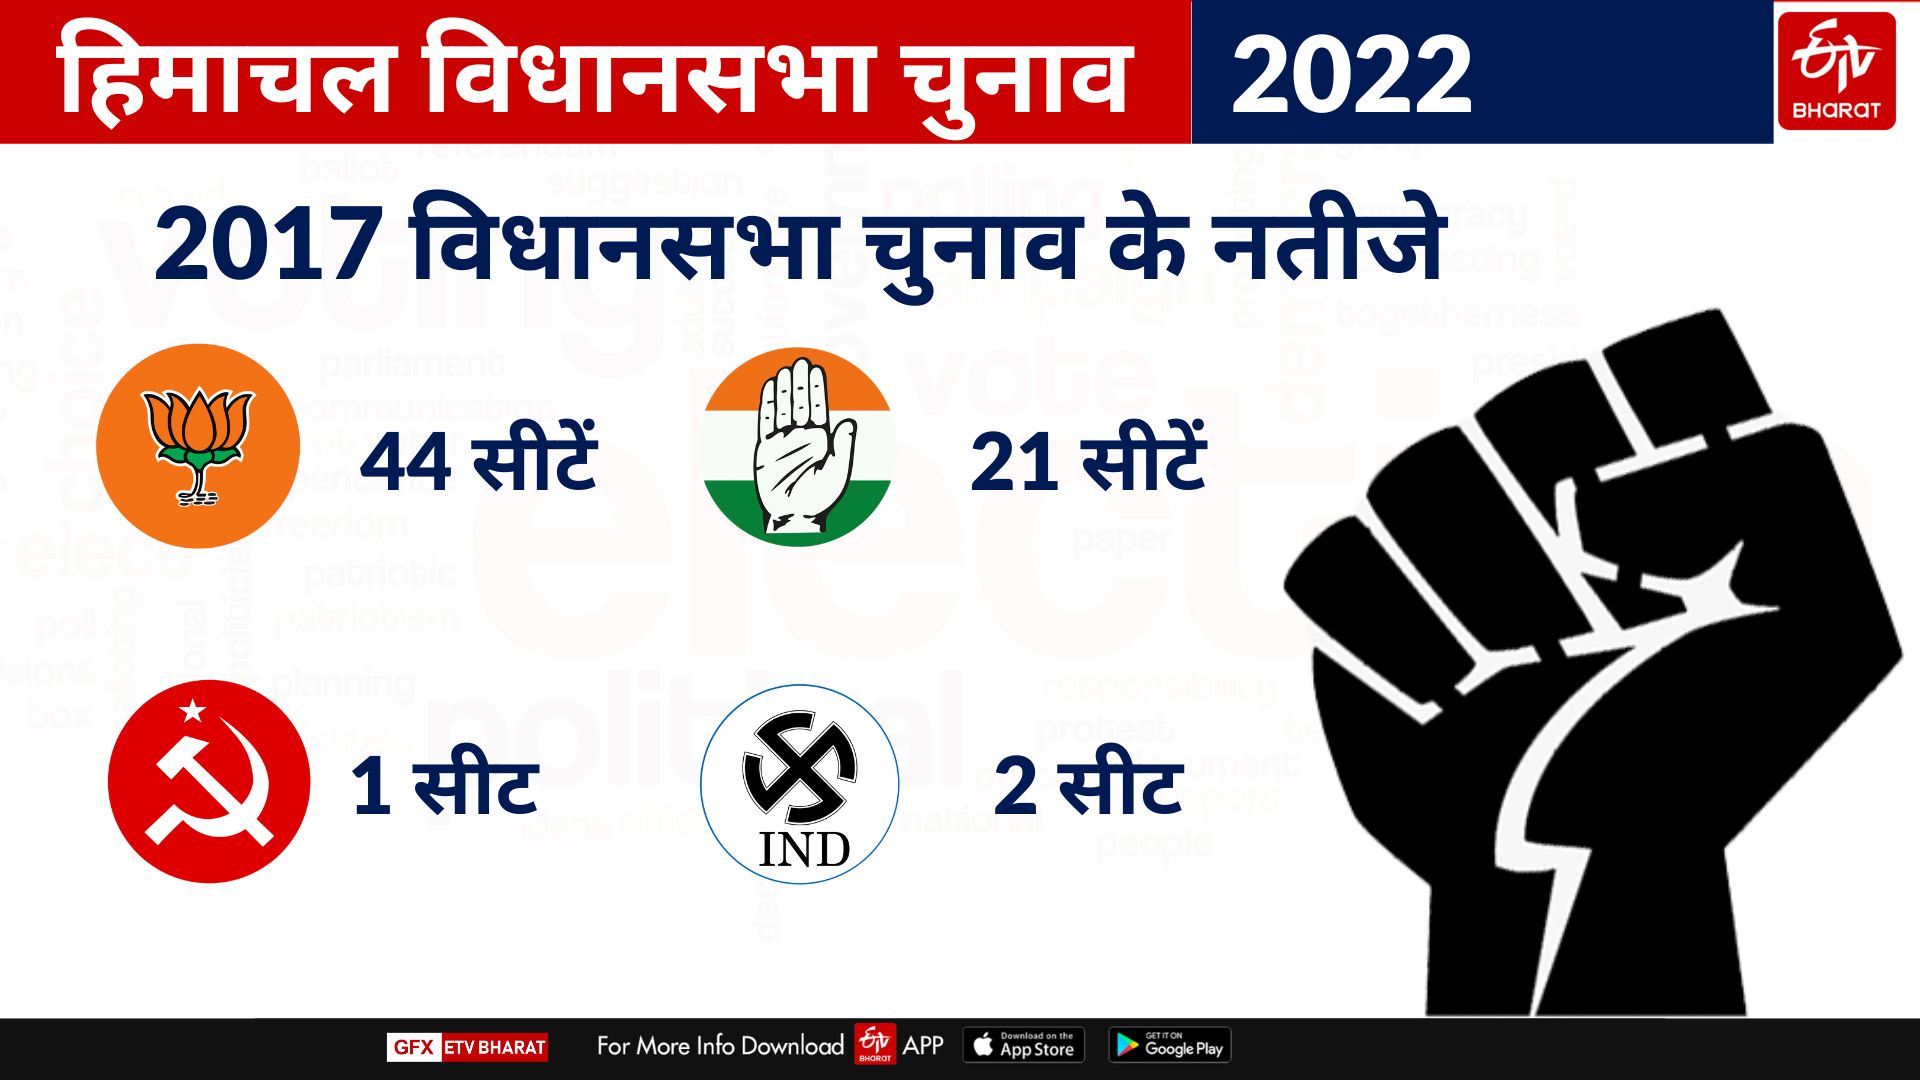 himachal election 2022